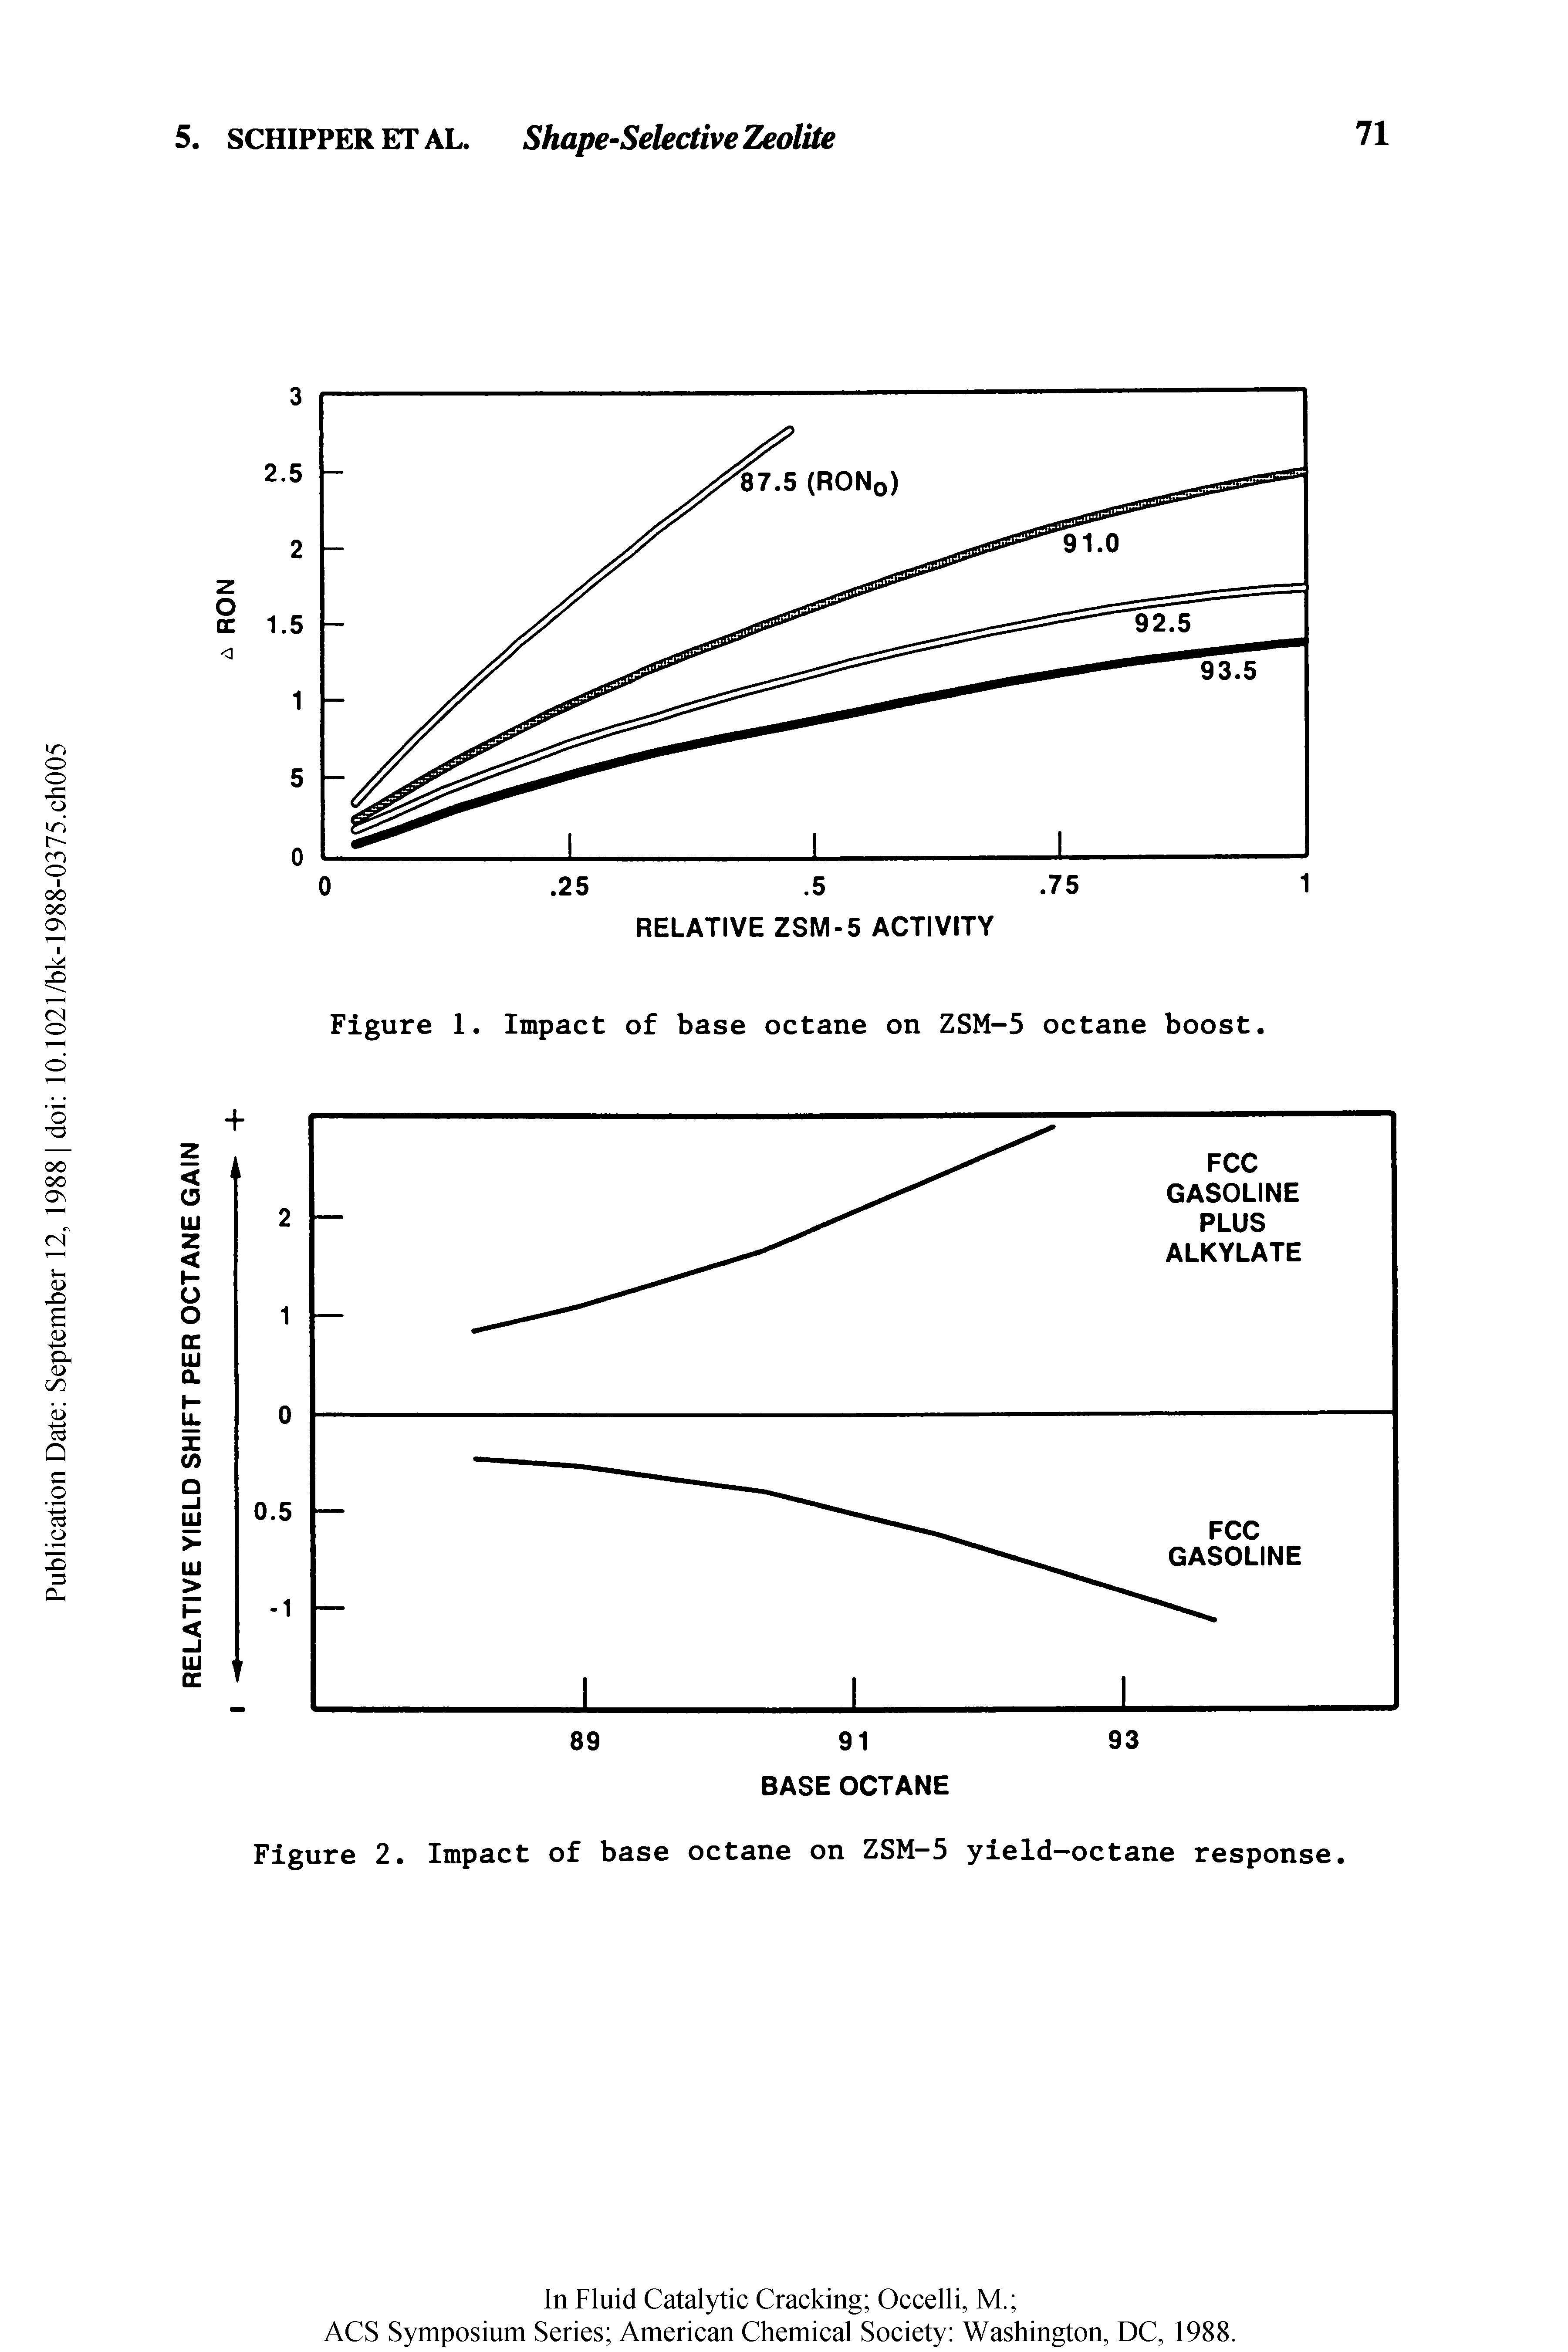 Figure 1. Impact of base octane on ZSM-5 octane boost.